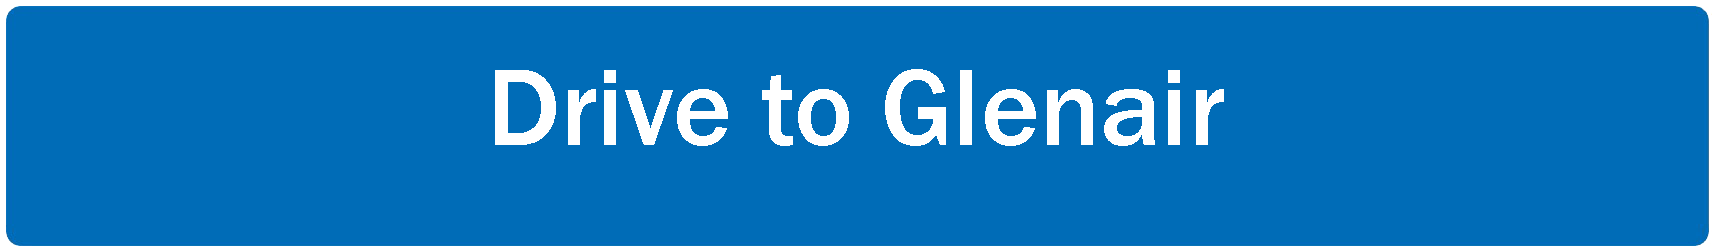 Drive to Glenair